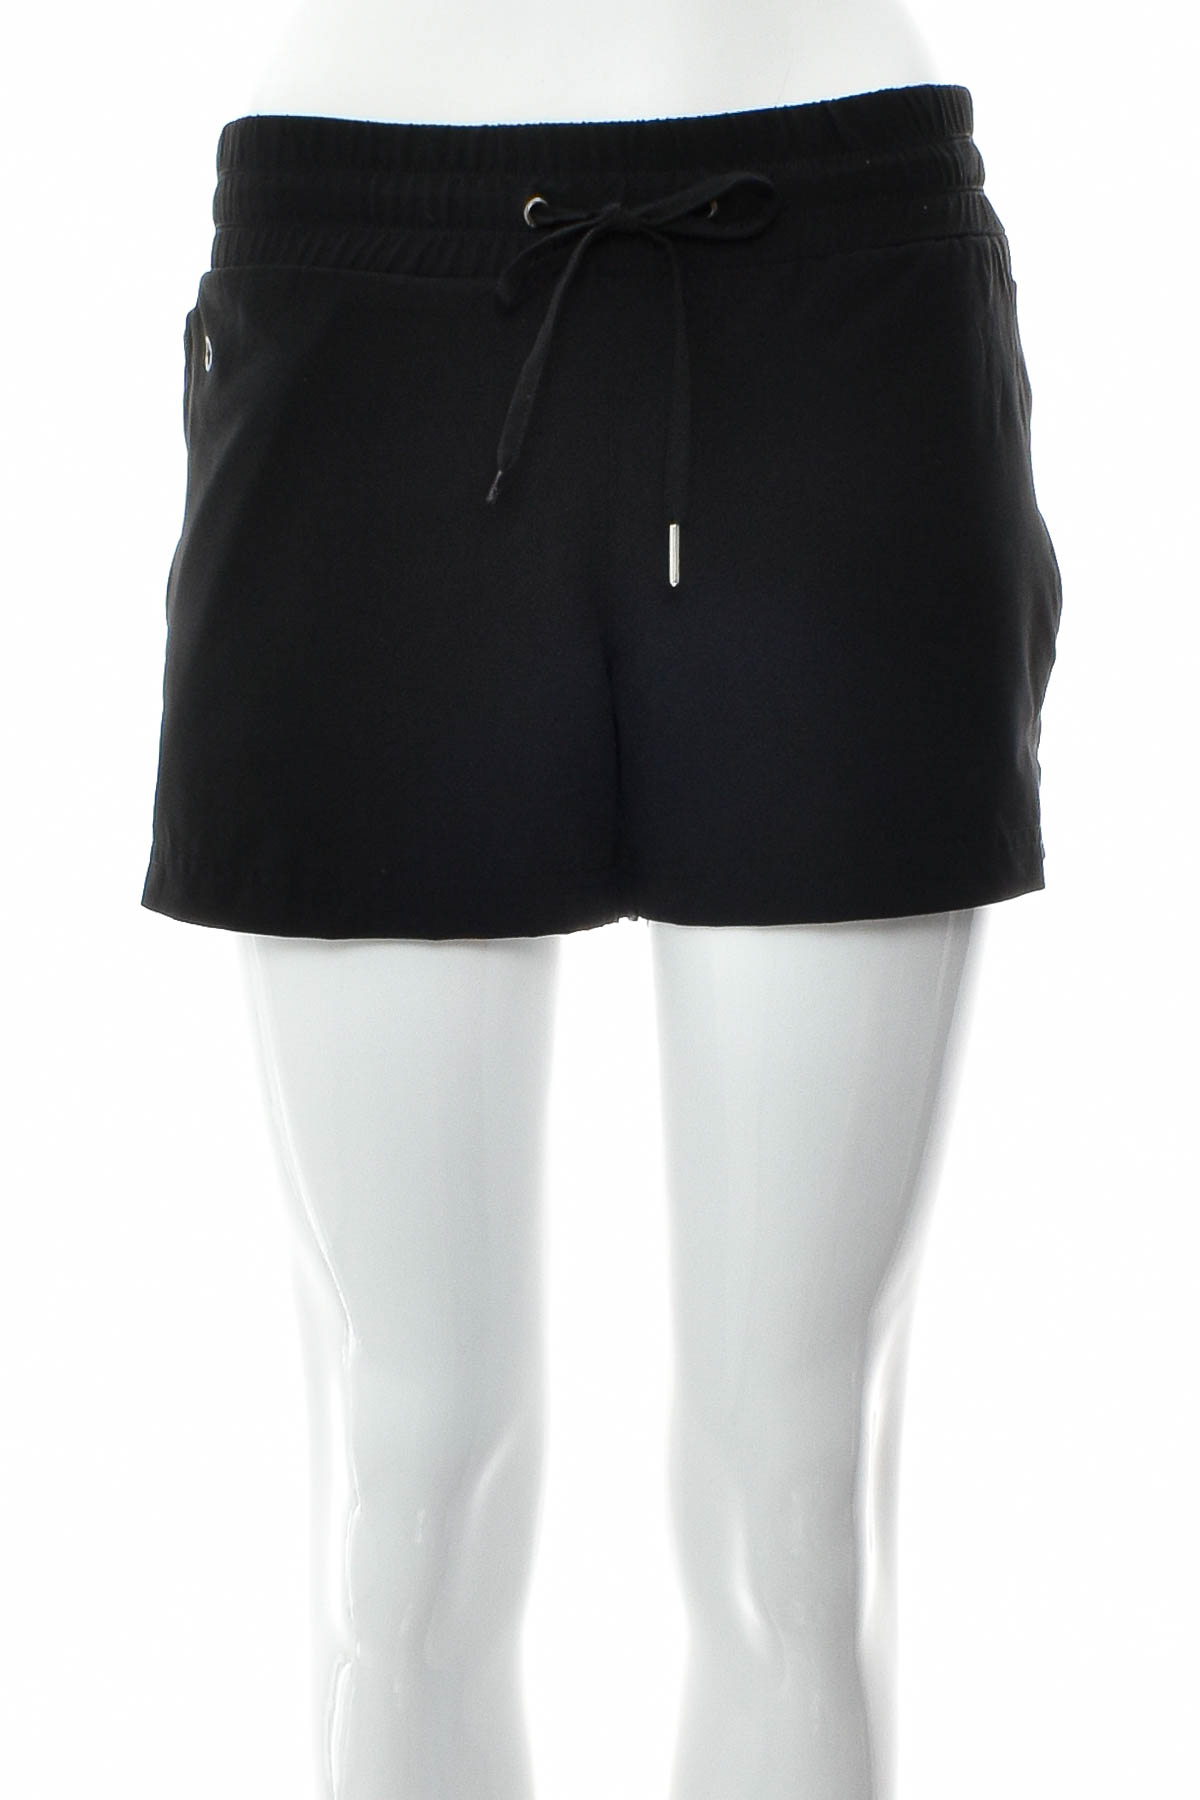 Female shorts - Alex Athletics - 0